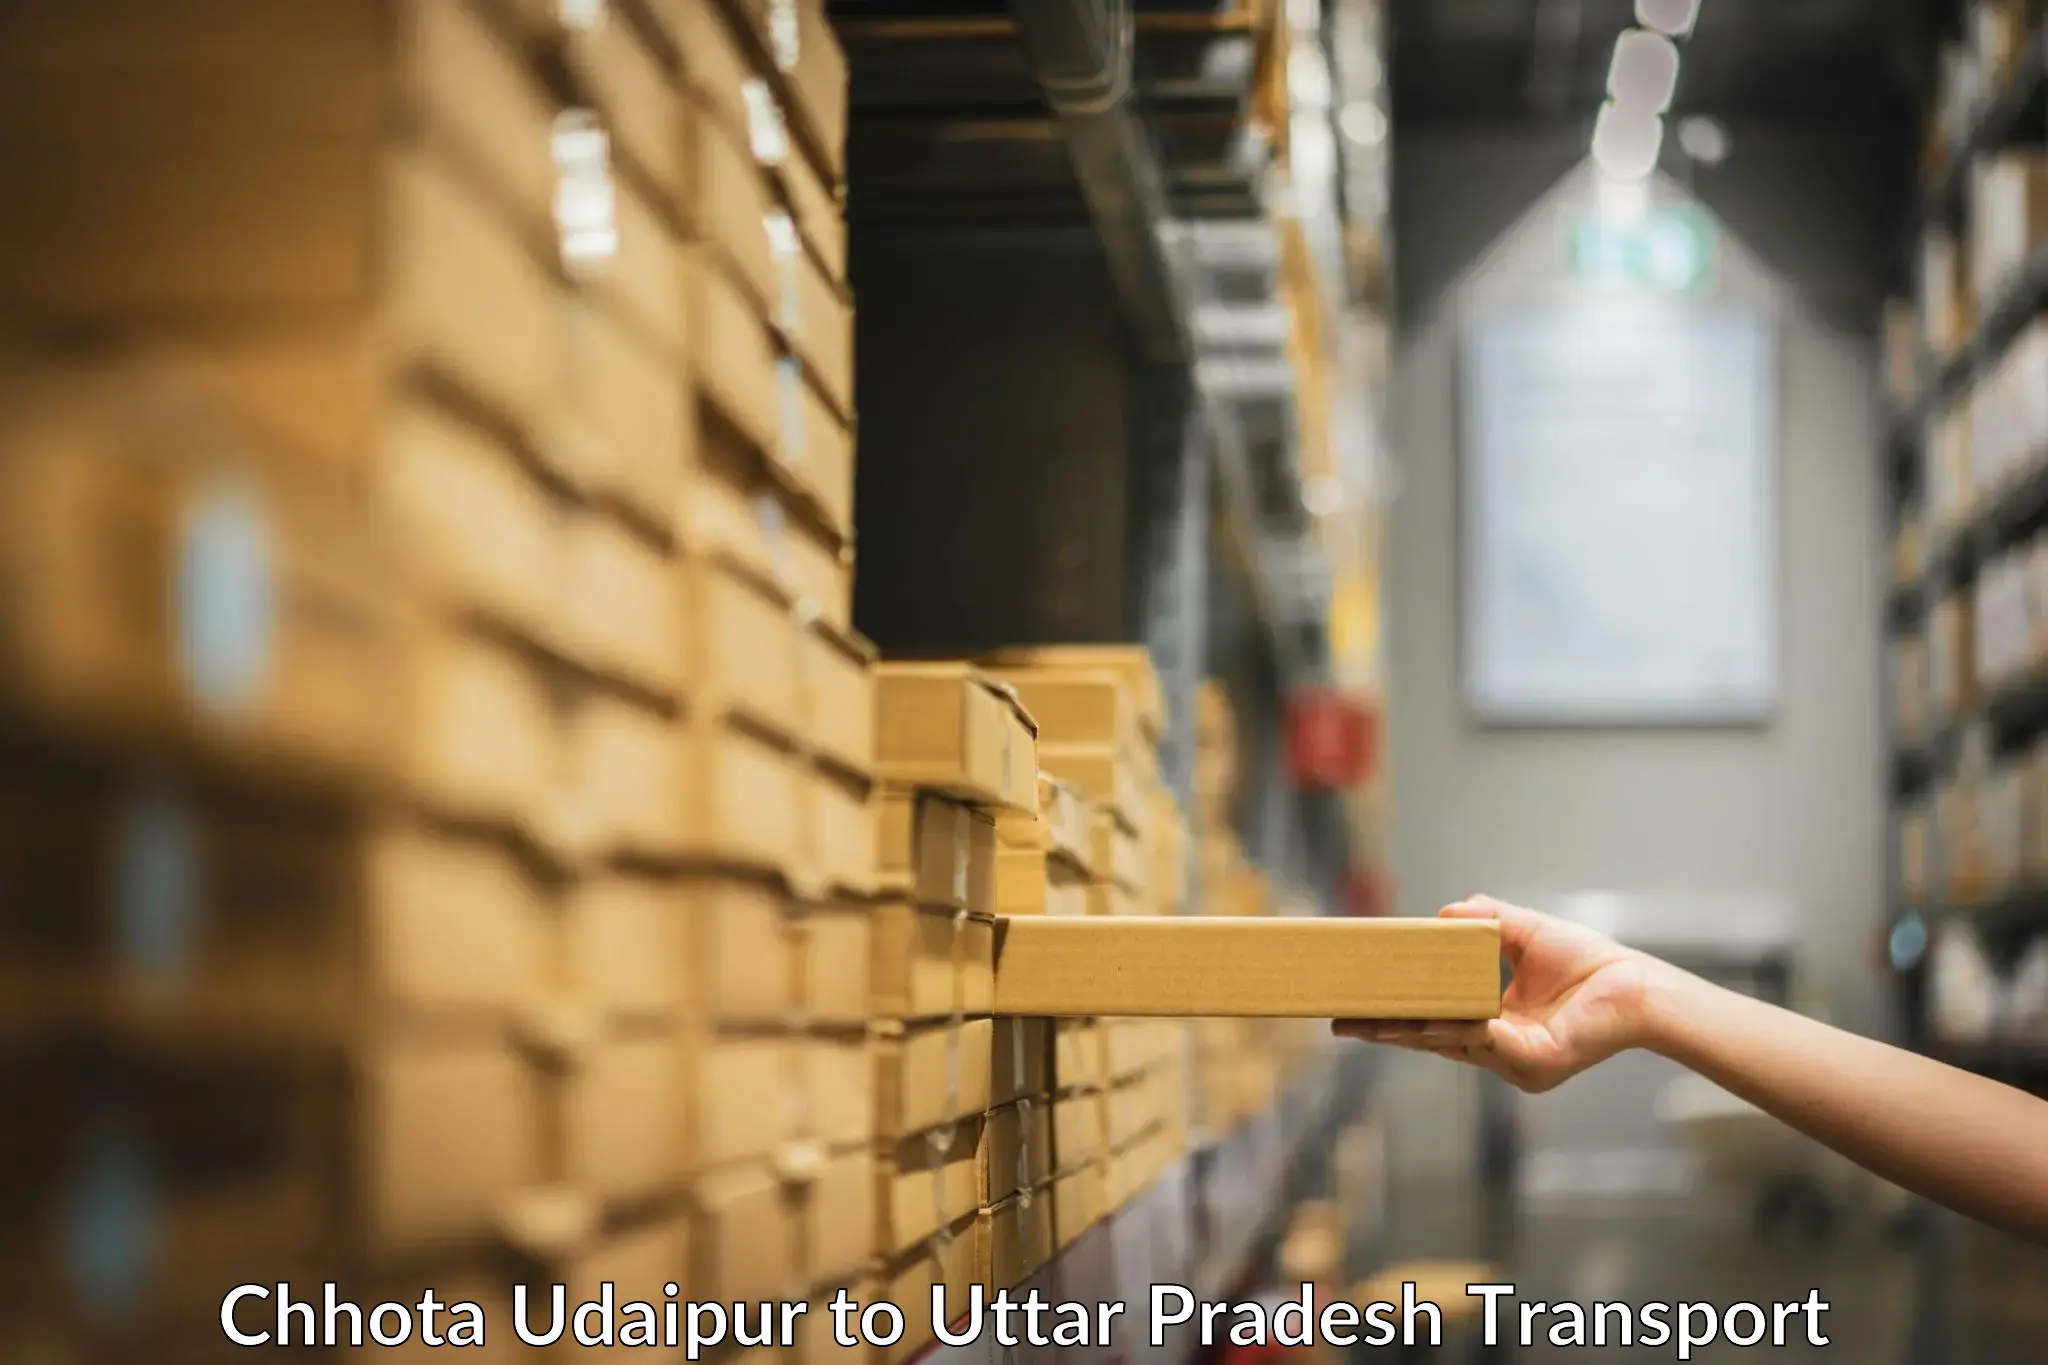 Truck transport companies in India Chhota Udaipur to Barabanki